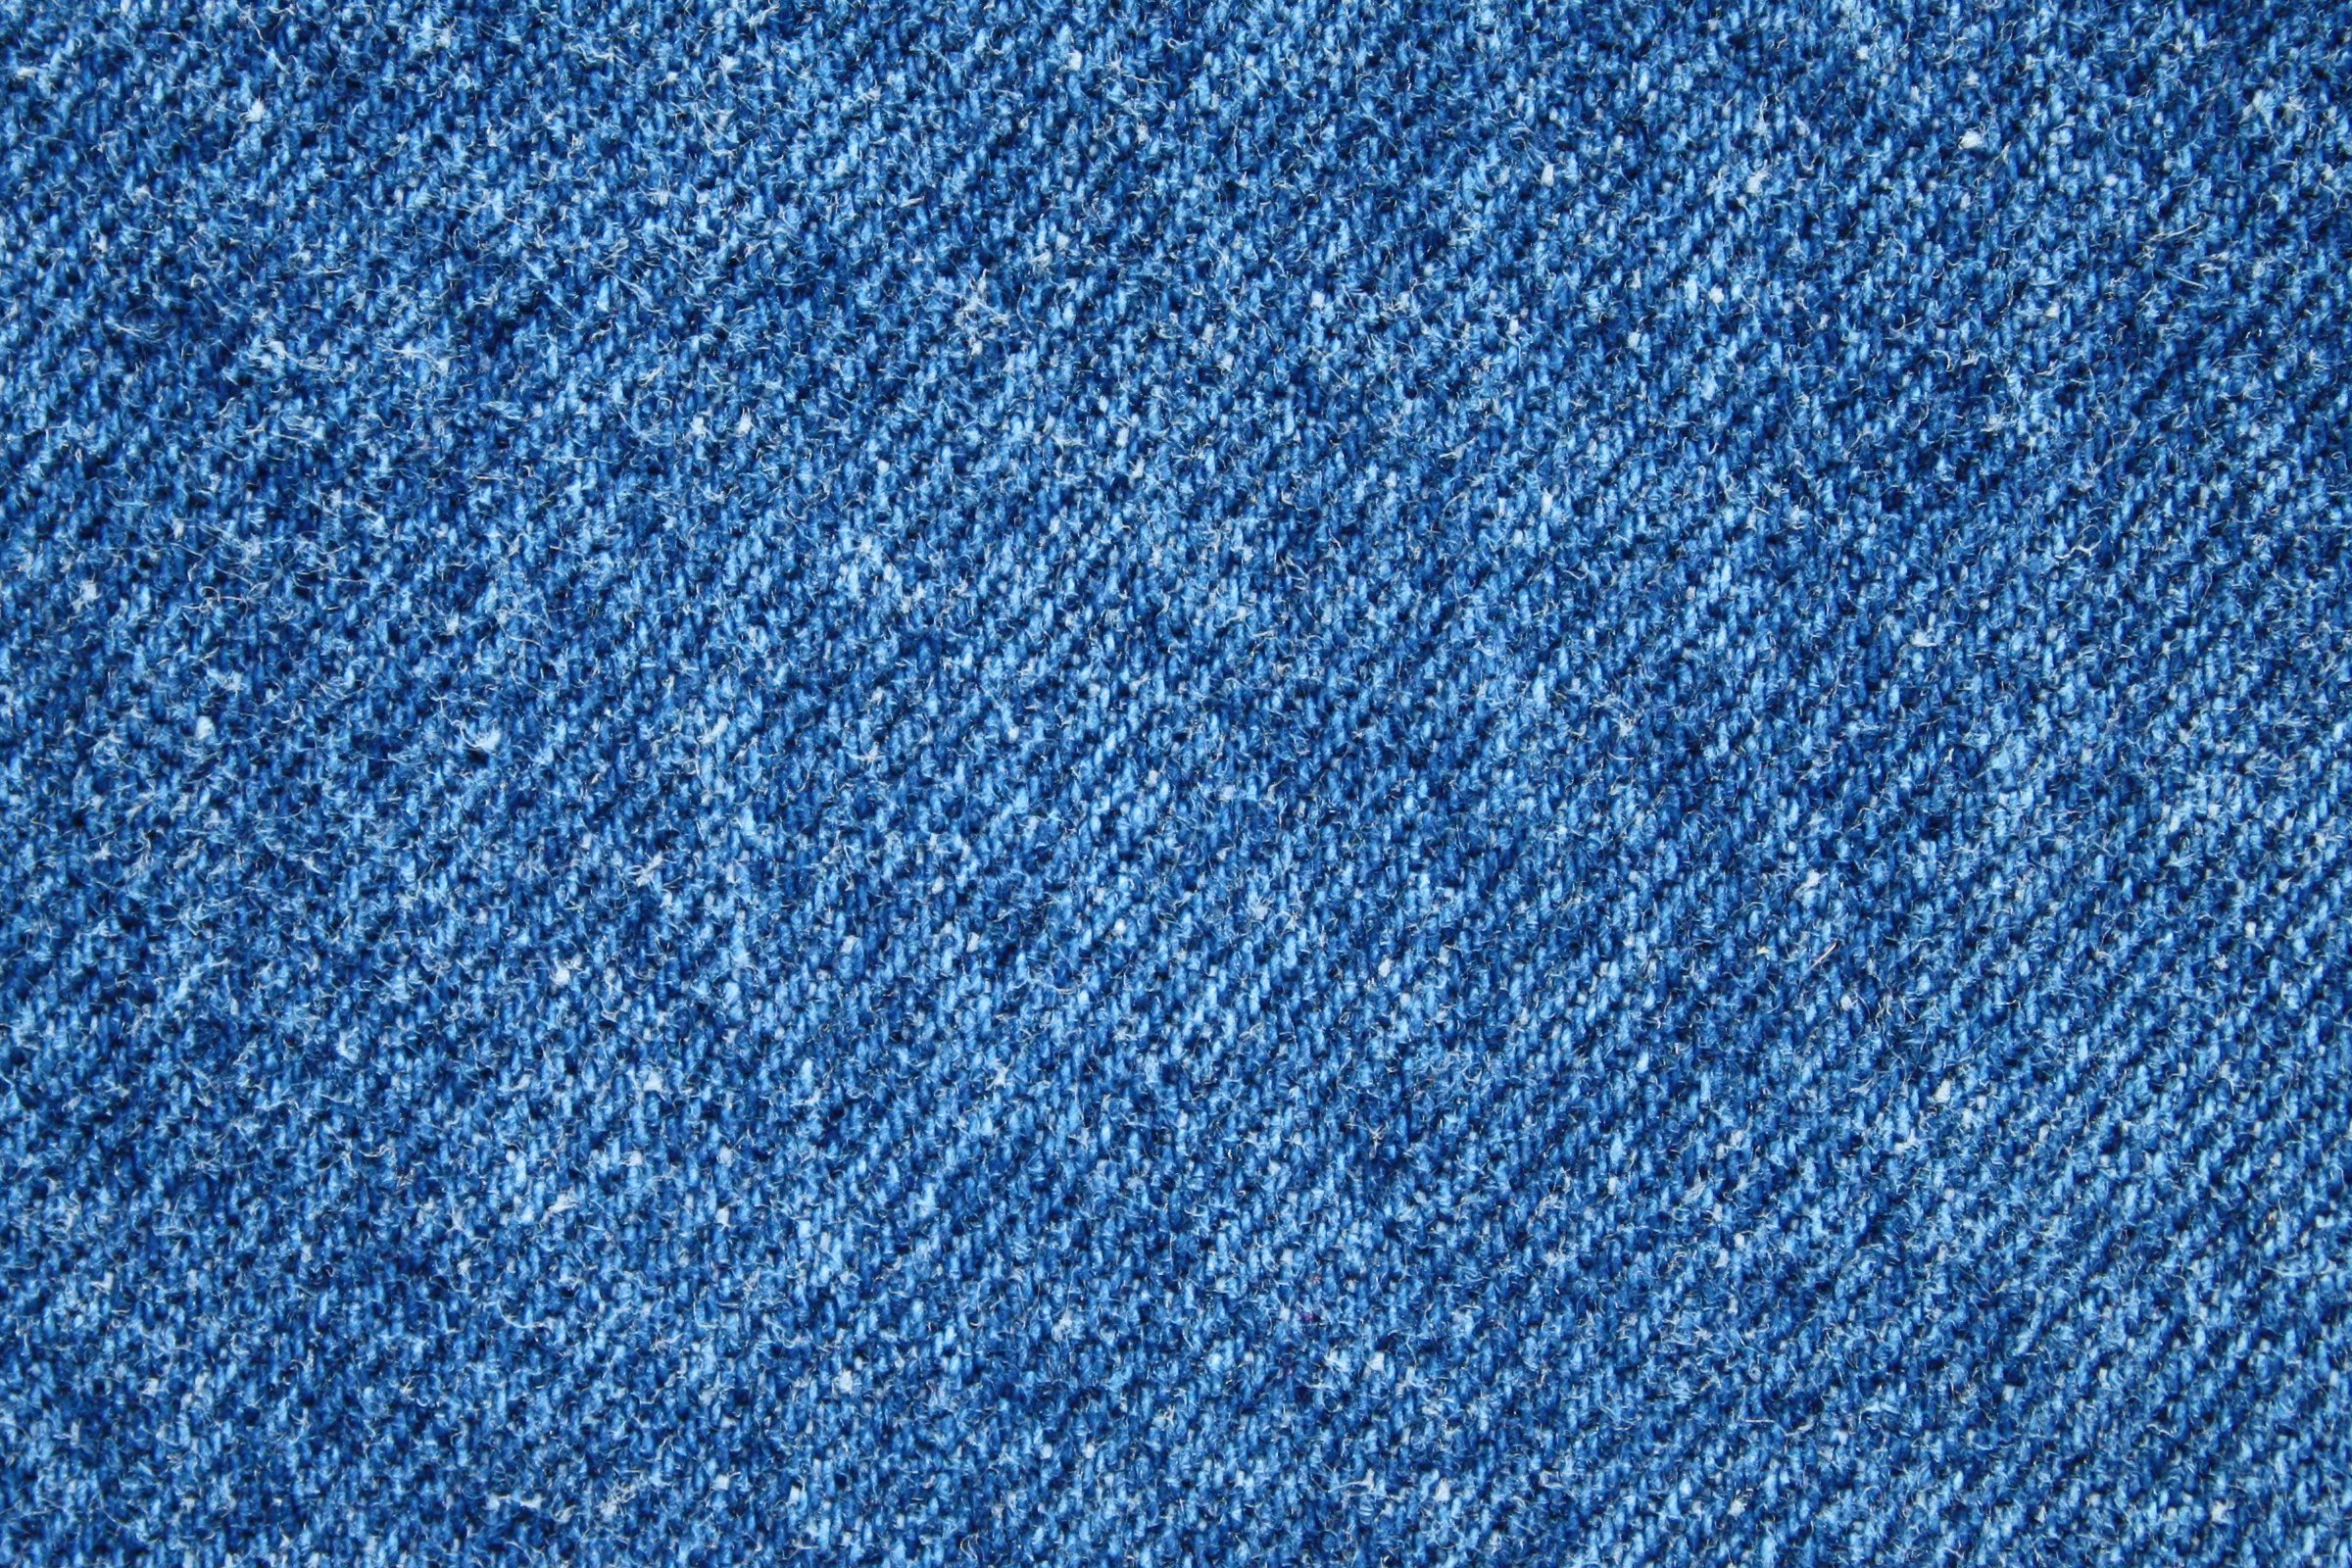 Blue Denim Fabric Closeup Texture Picture Free Photograph Photos